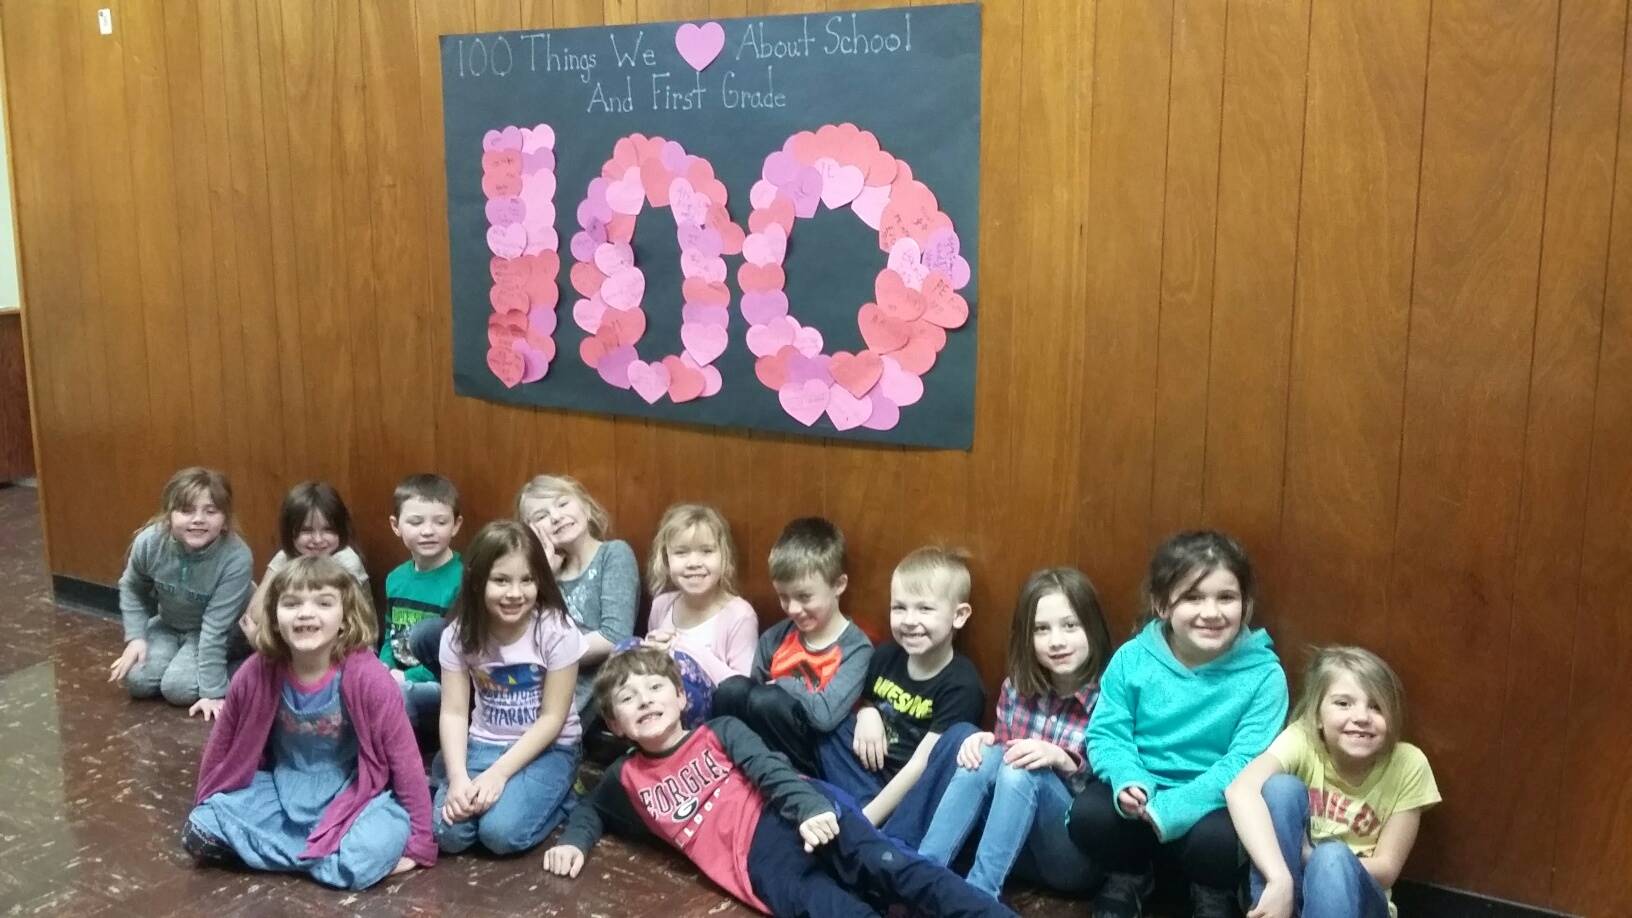 1st grade class wrote 100 ways to love 1st grade!